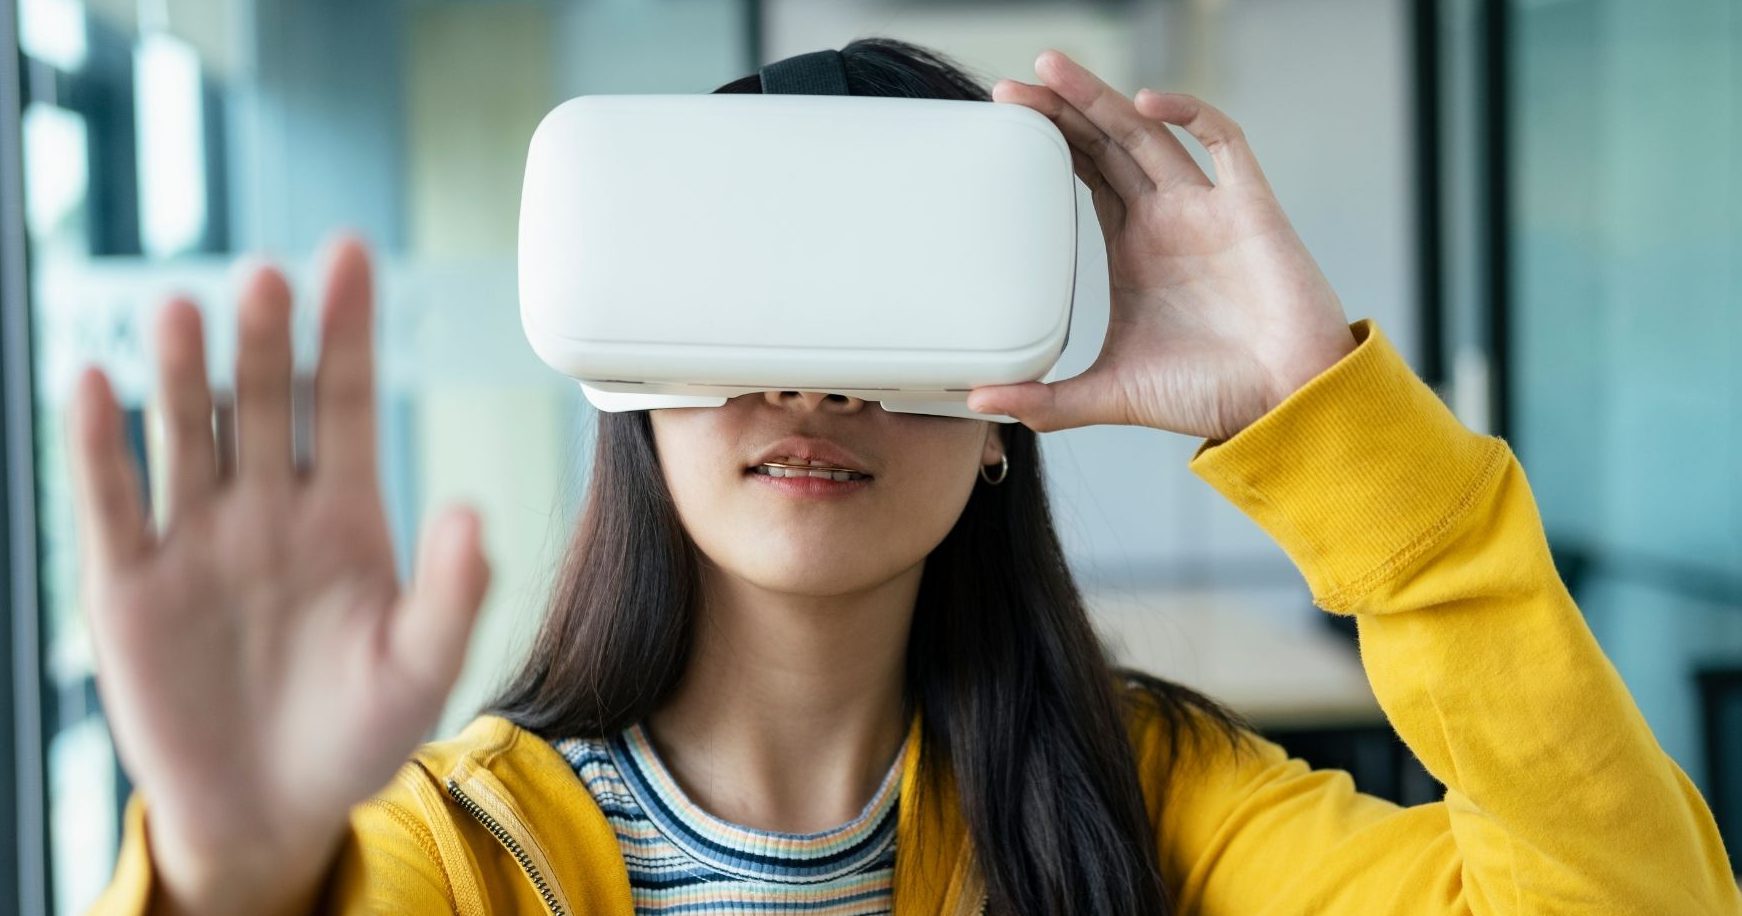 Global Virtual Reality Software Market